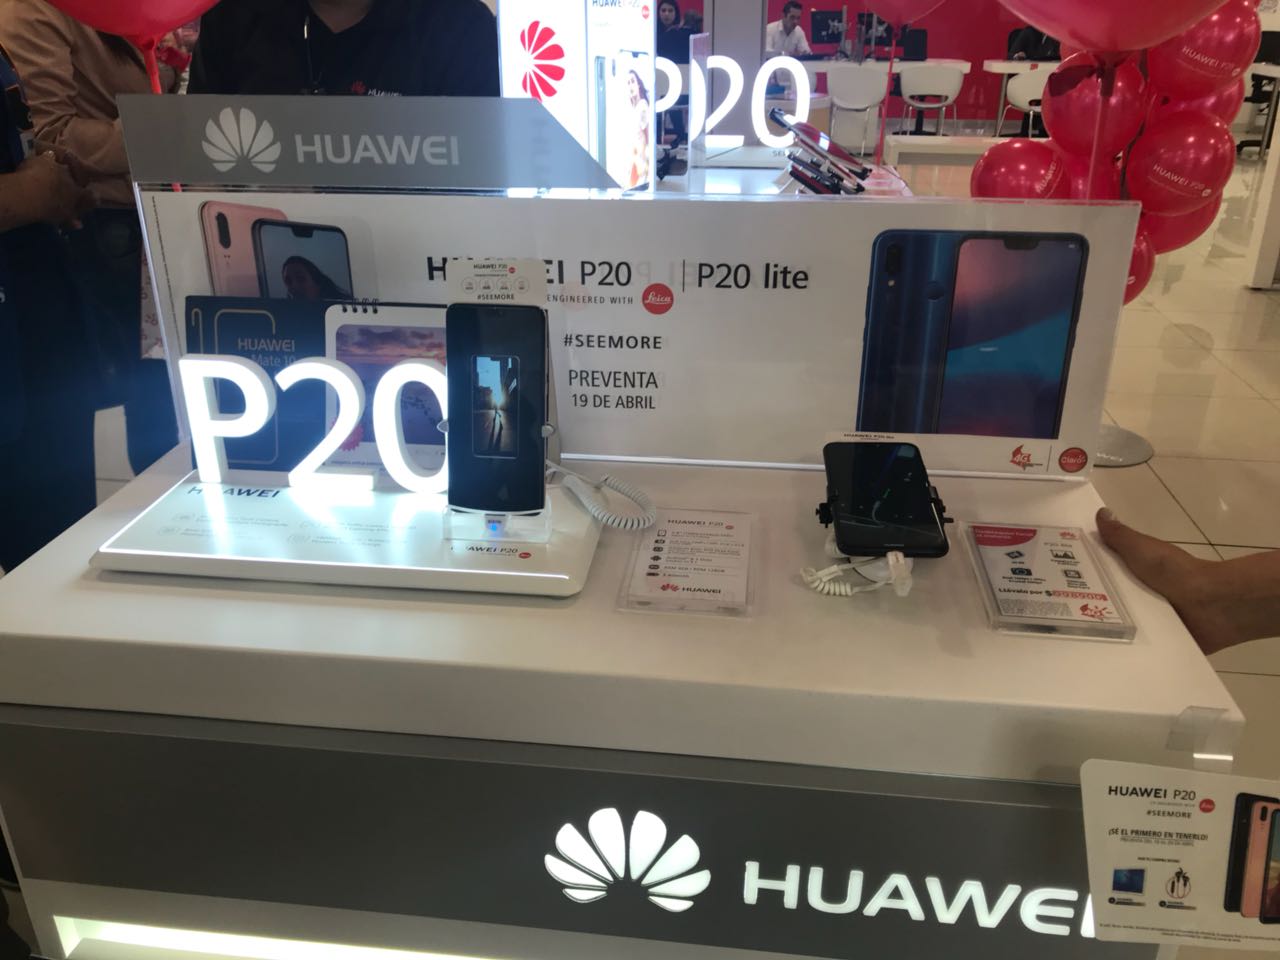 Huawei p20 pro